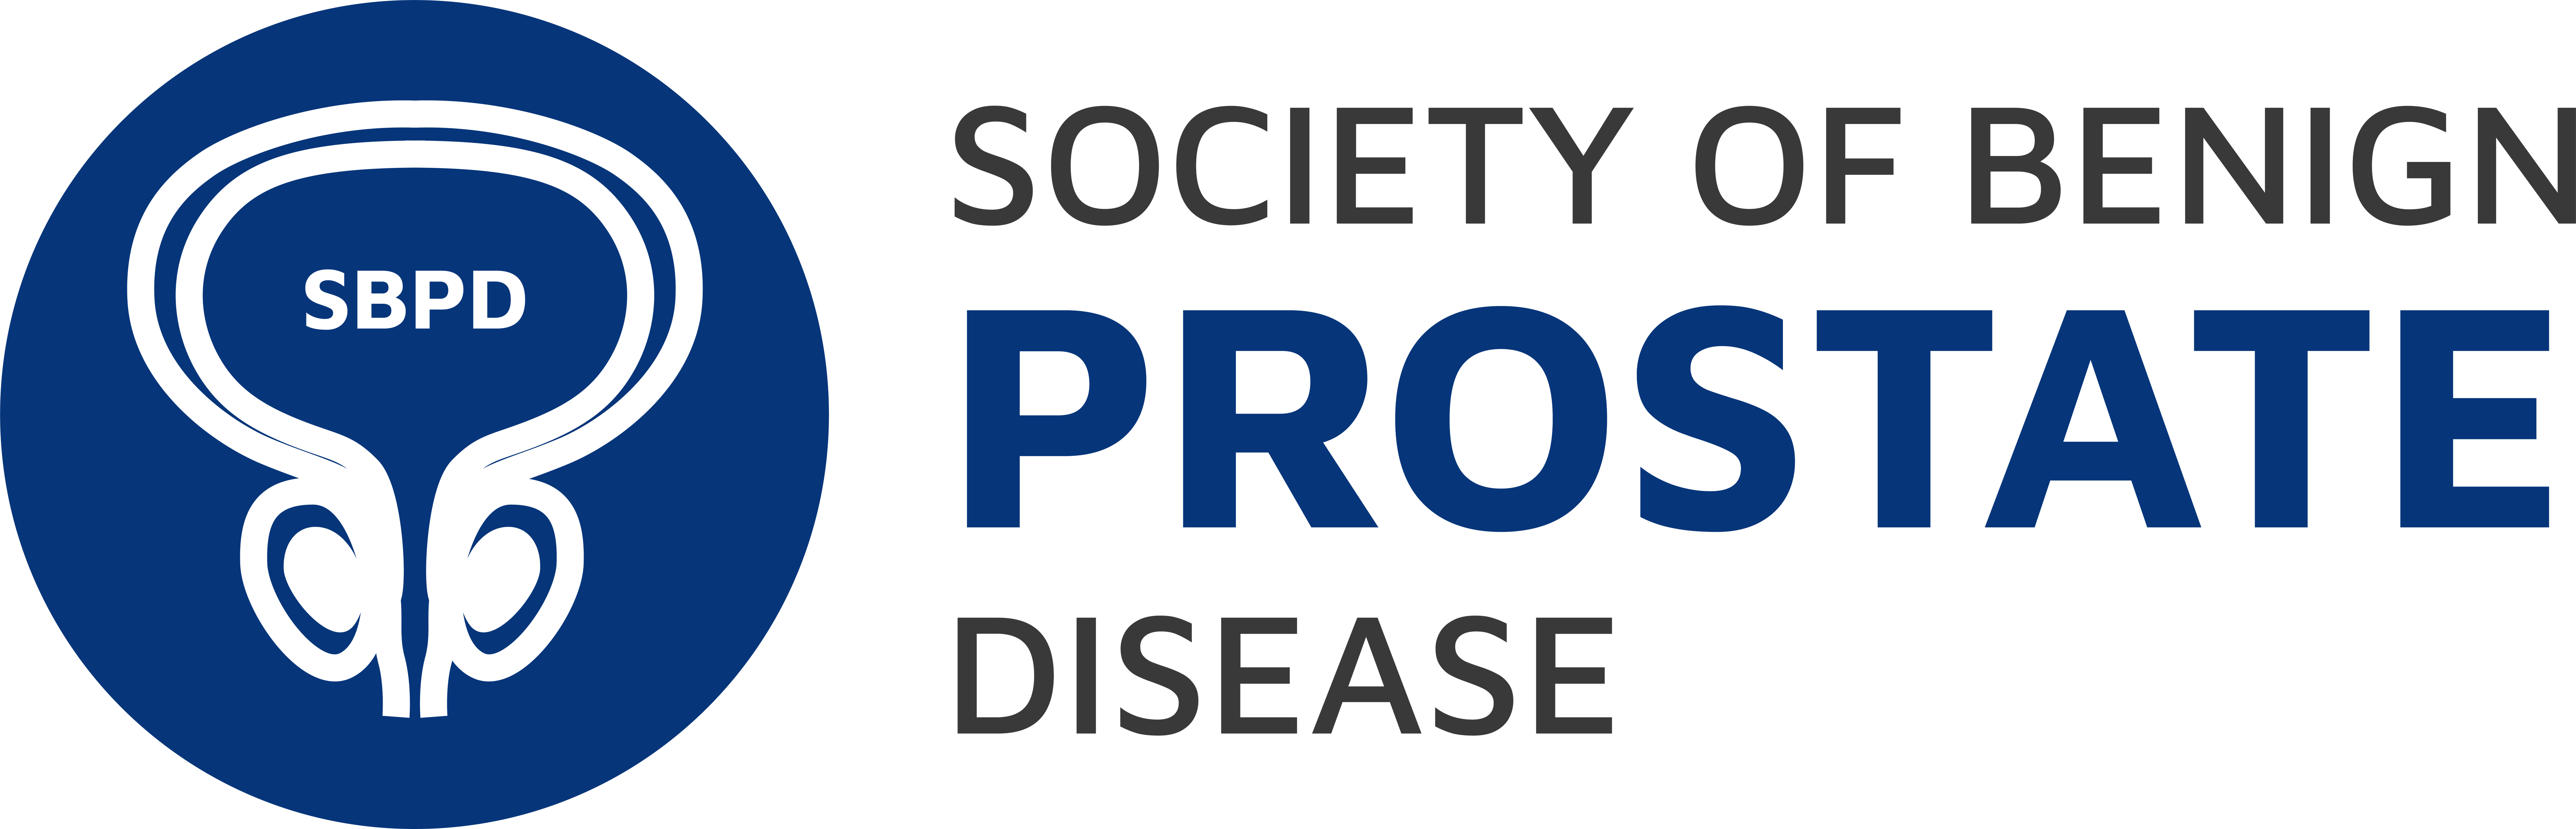 Society of Benign Prostate Disease